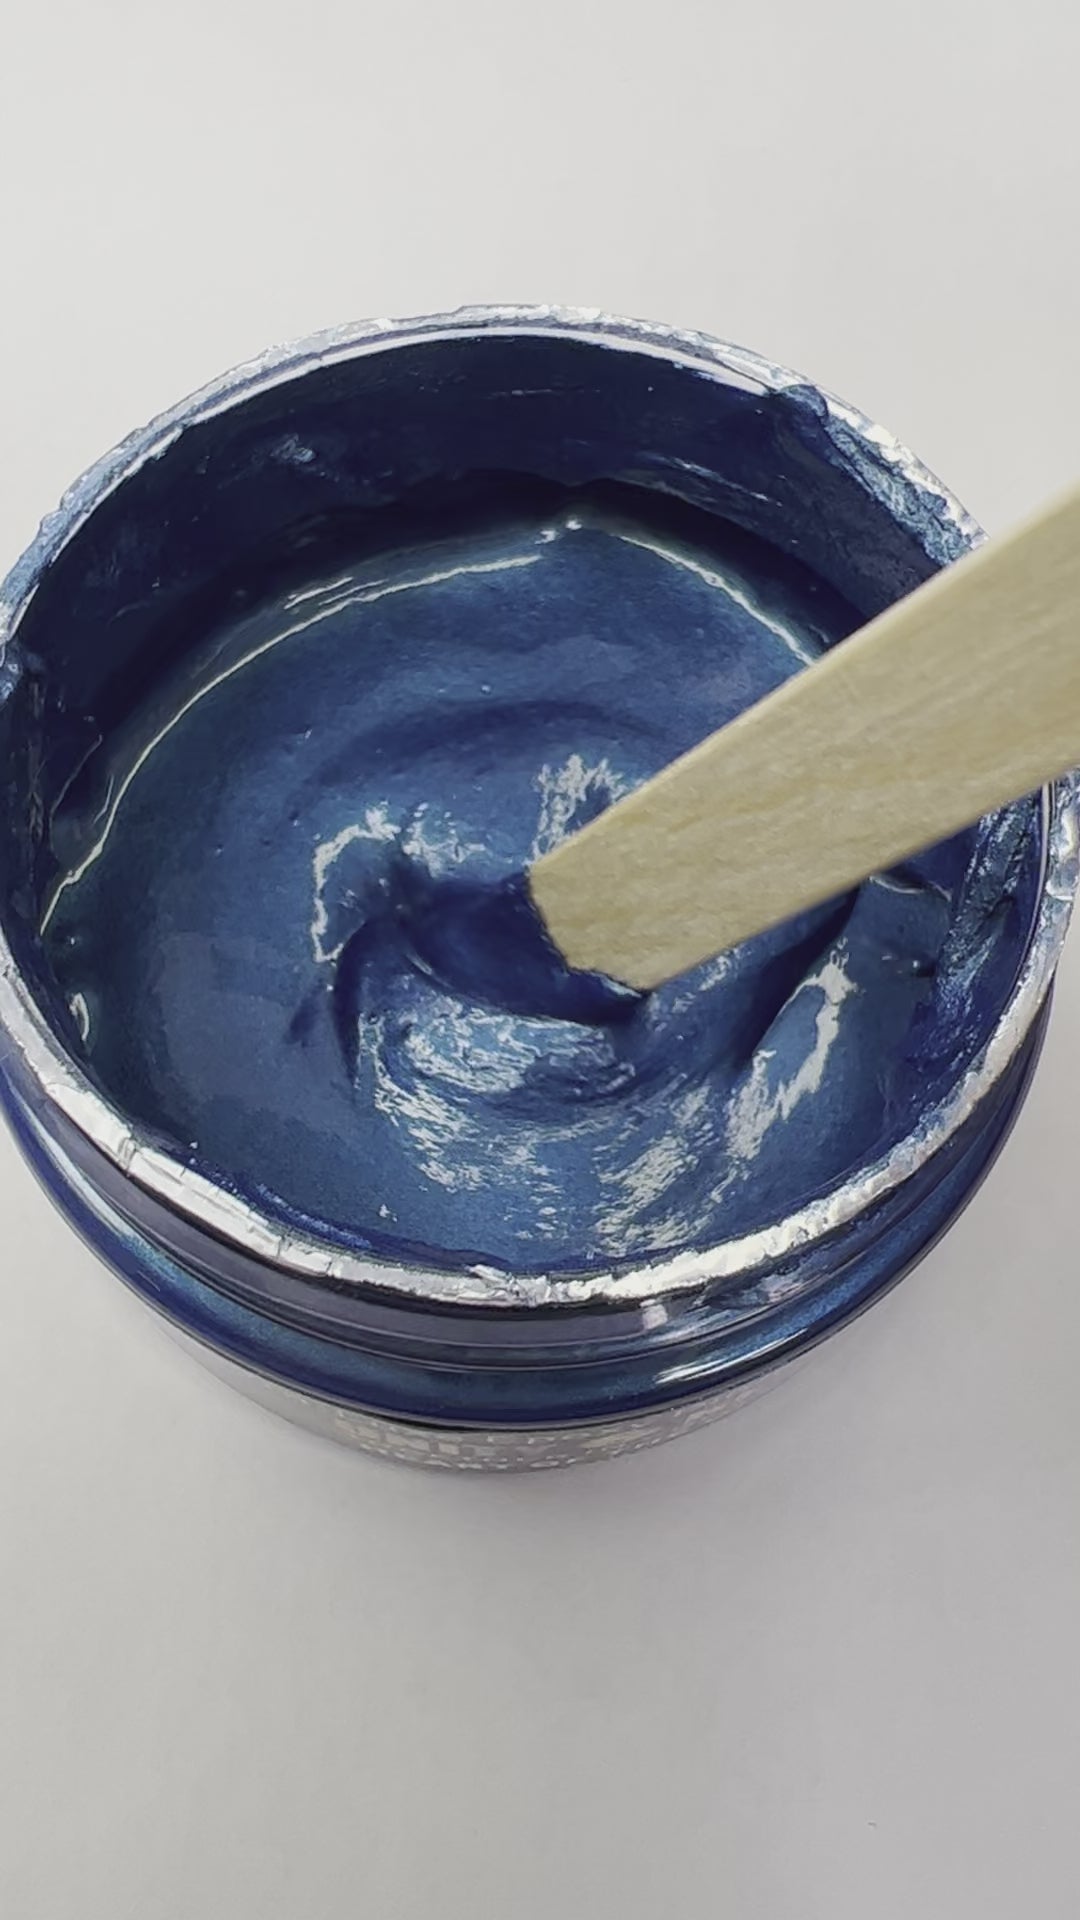 Discover Colour With Wholesale paste epoxy pigment 